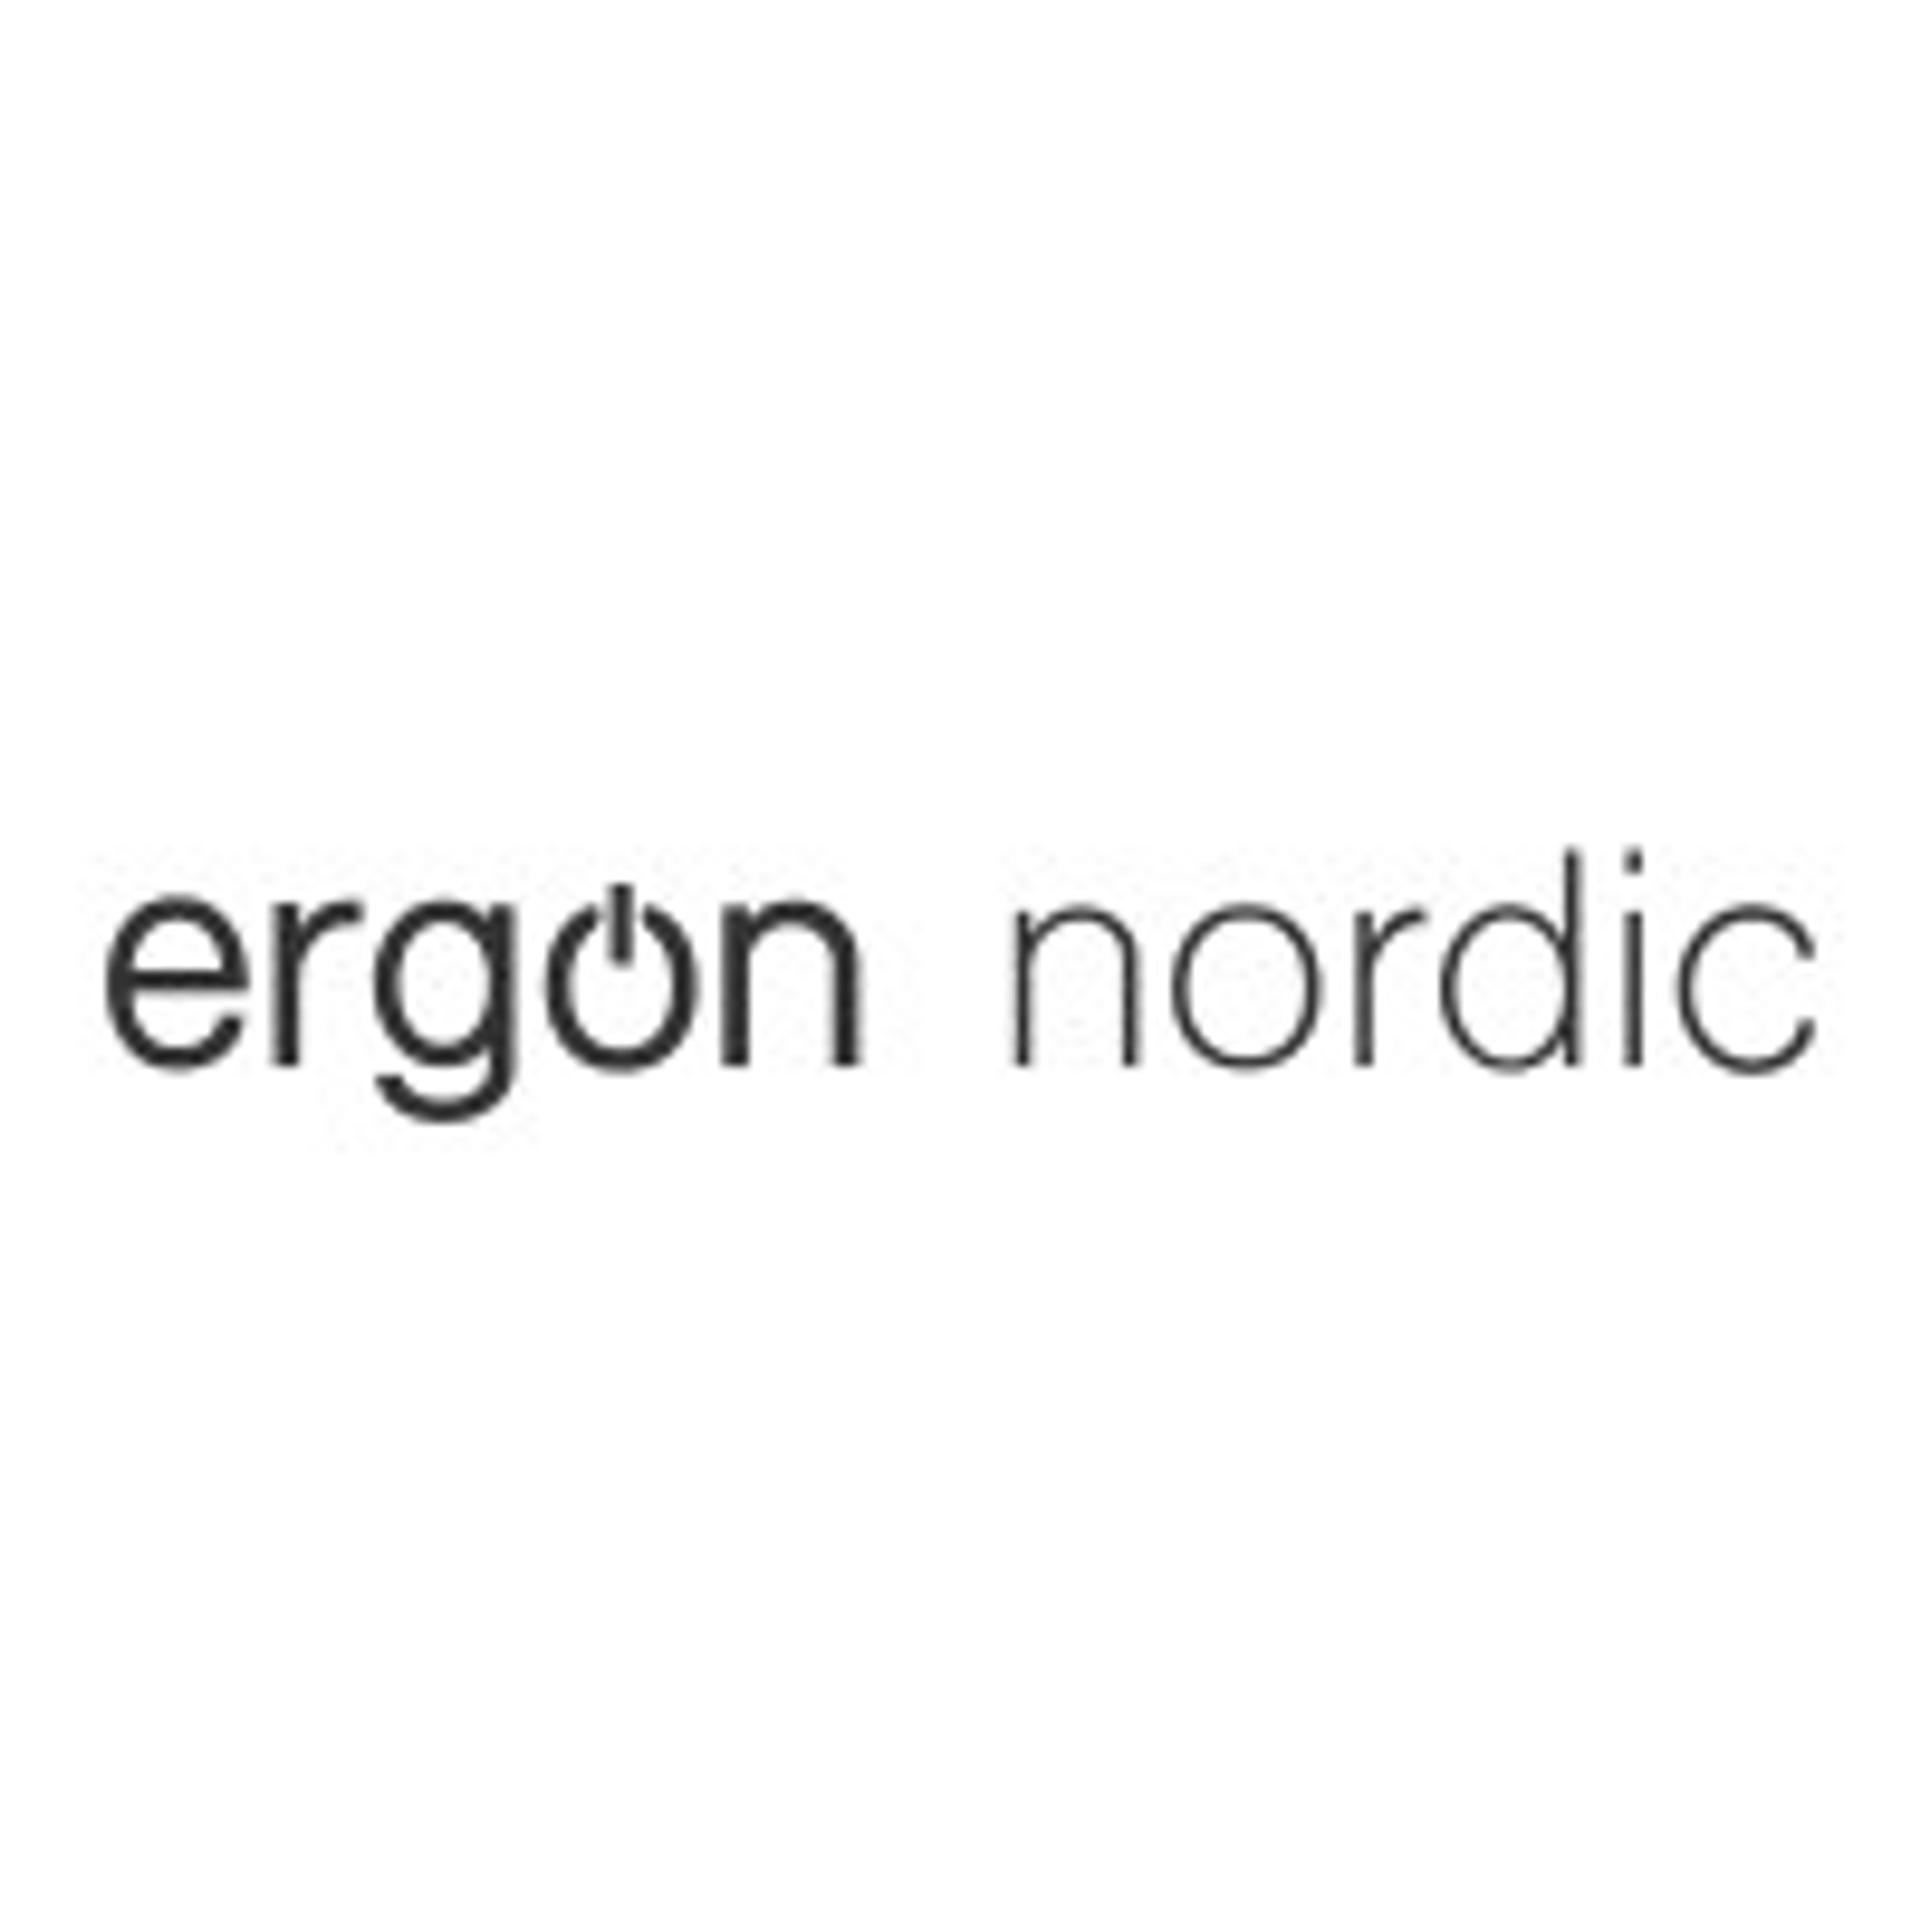 ERGON NORDIC AS